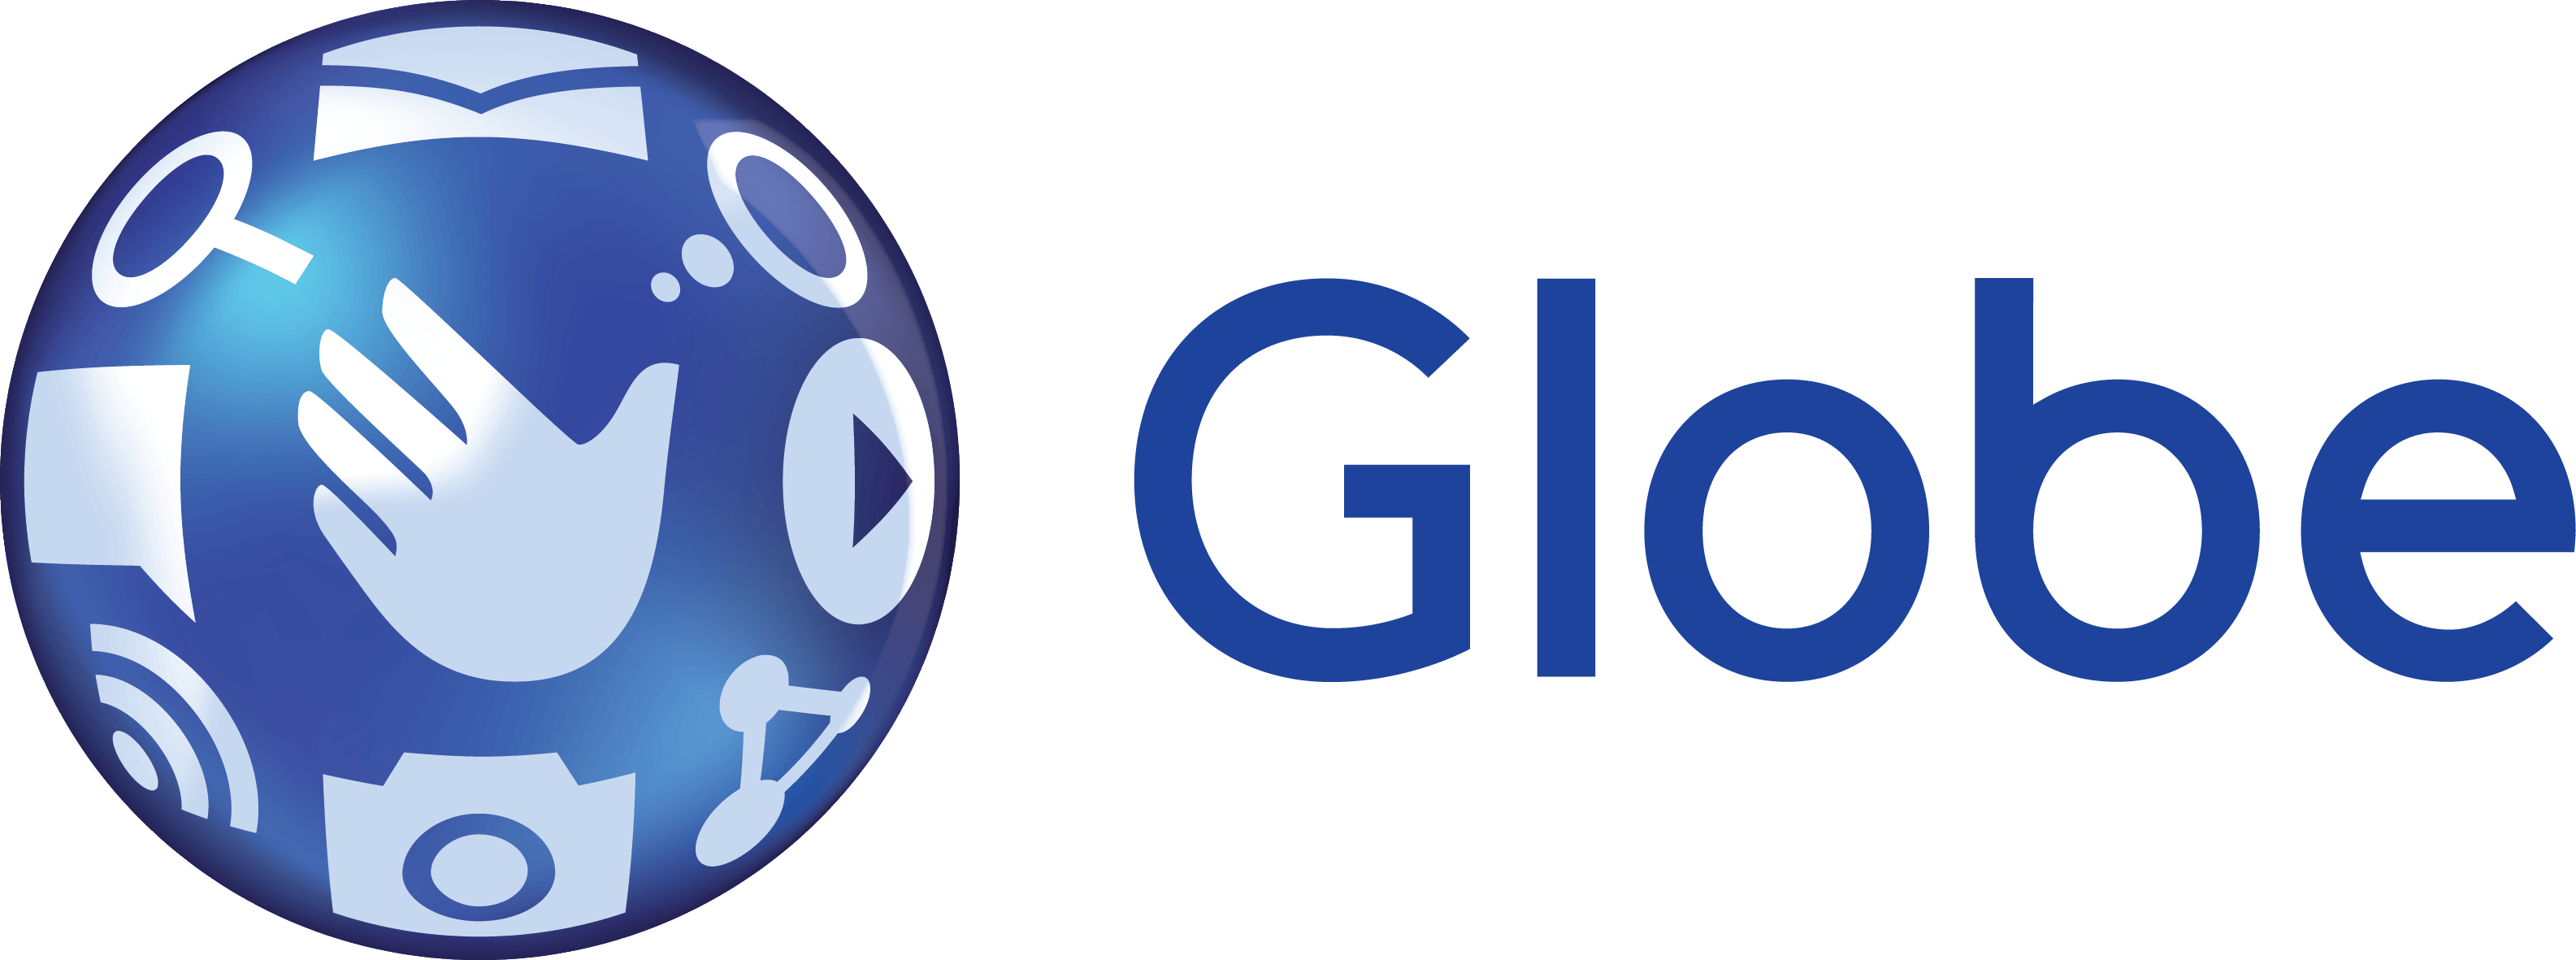 Facebook Globe Logo - Globe, Facebook collaborate to promote Digital Thumbprint Program